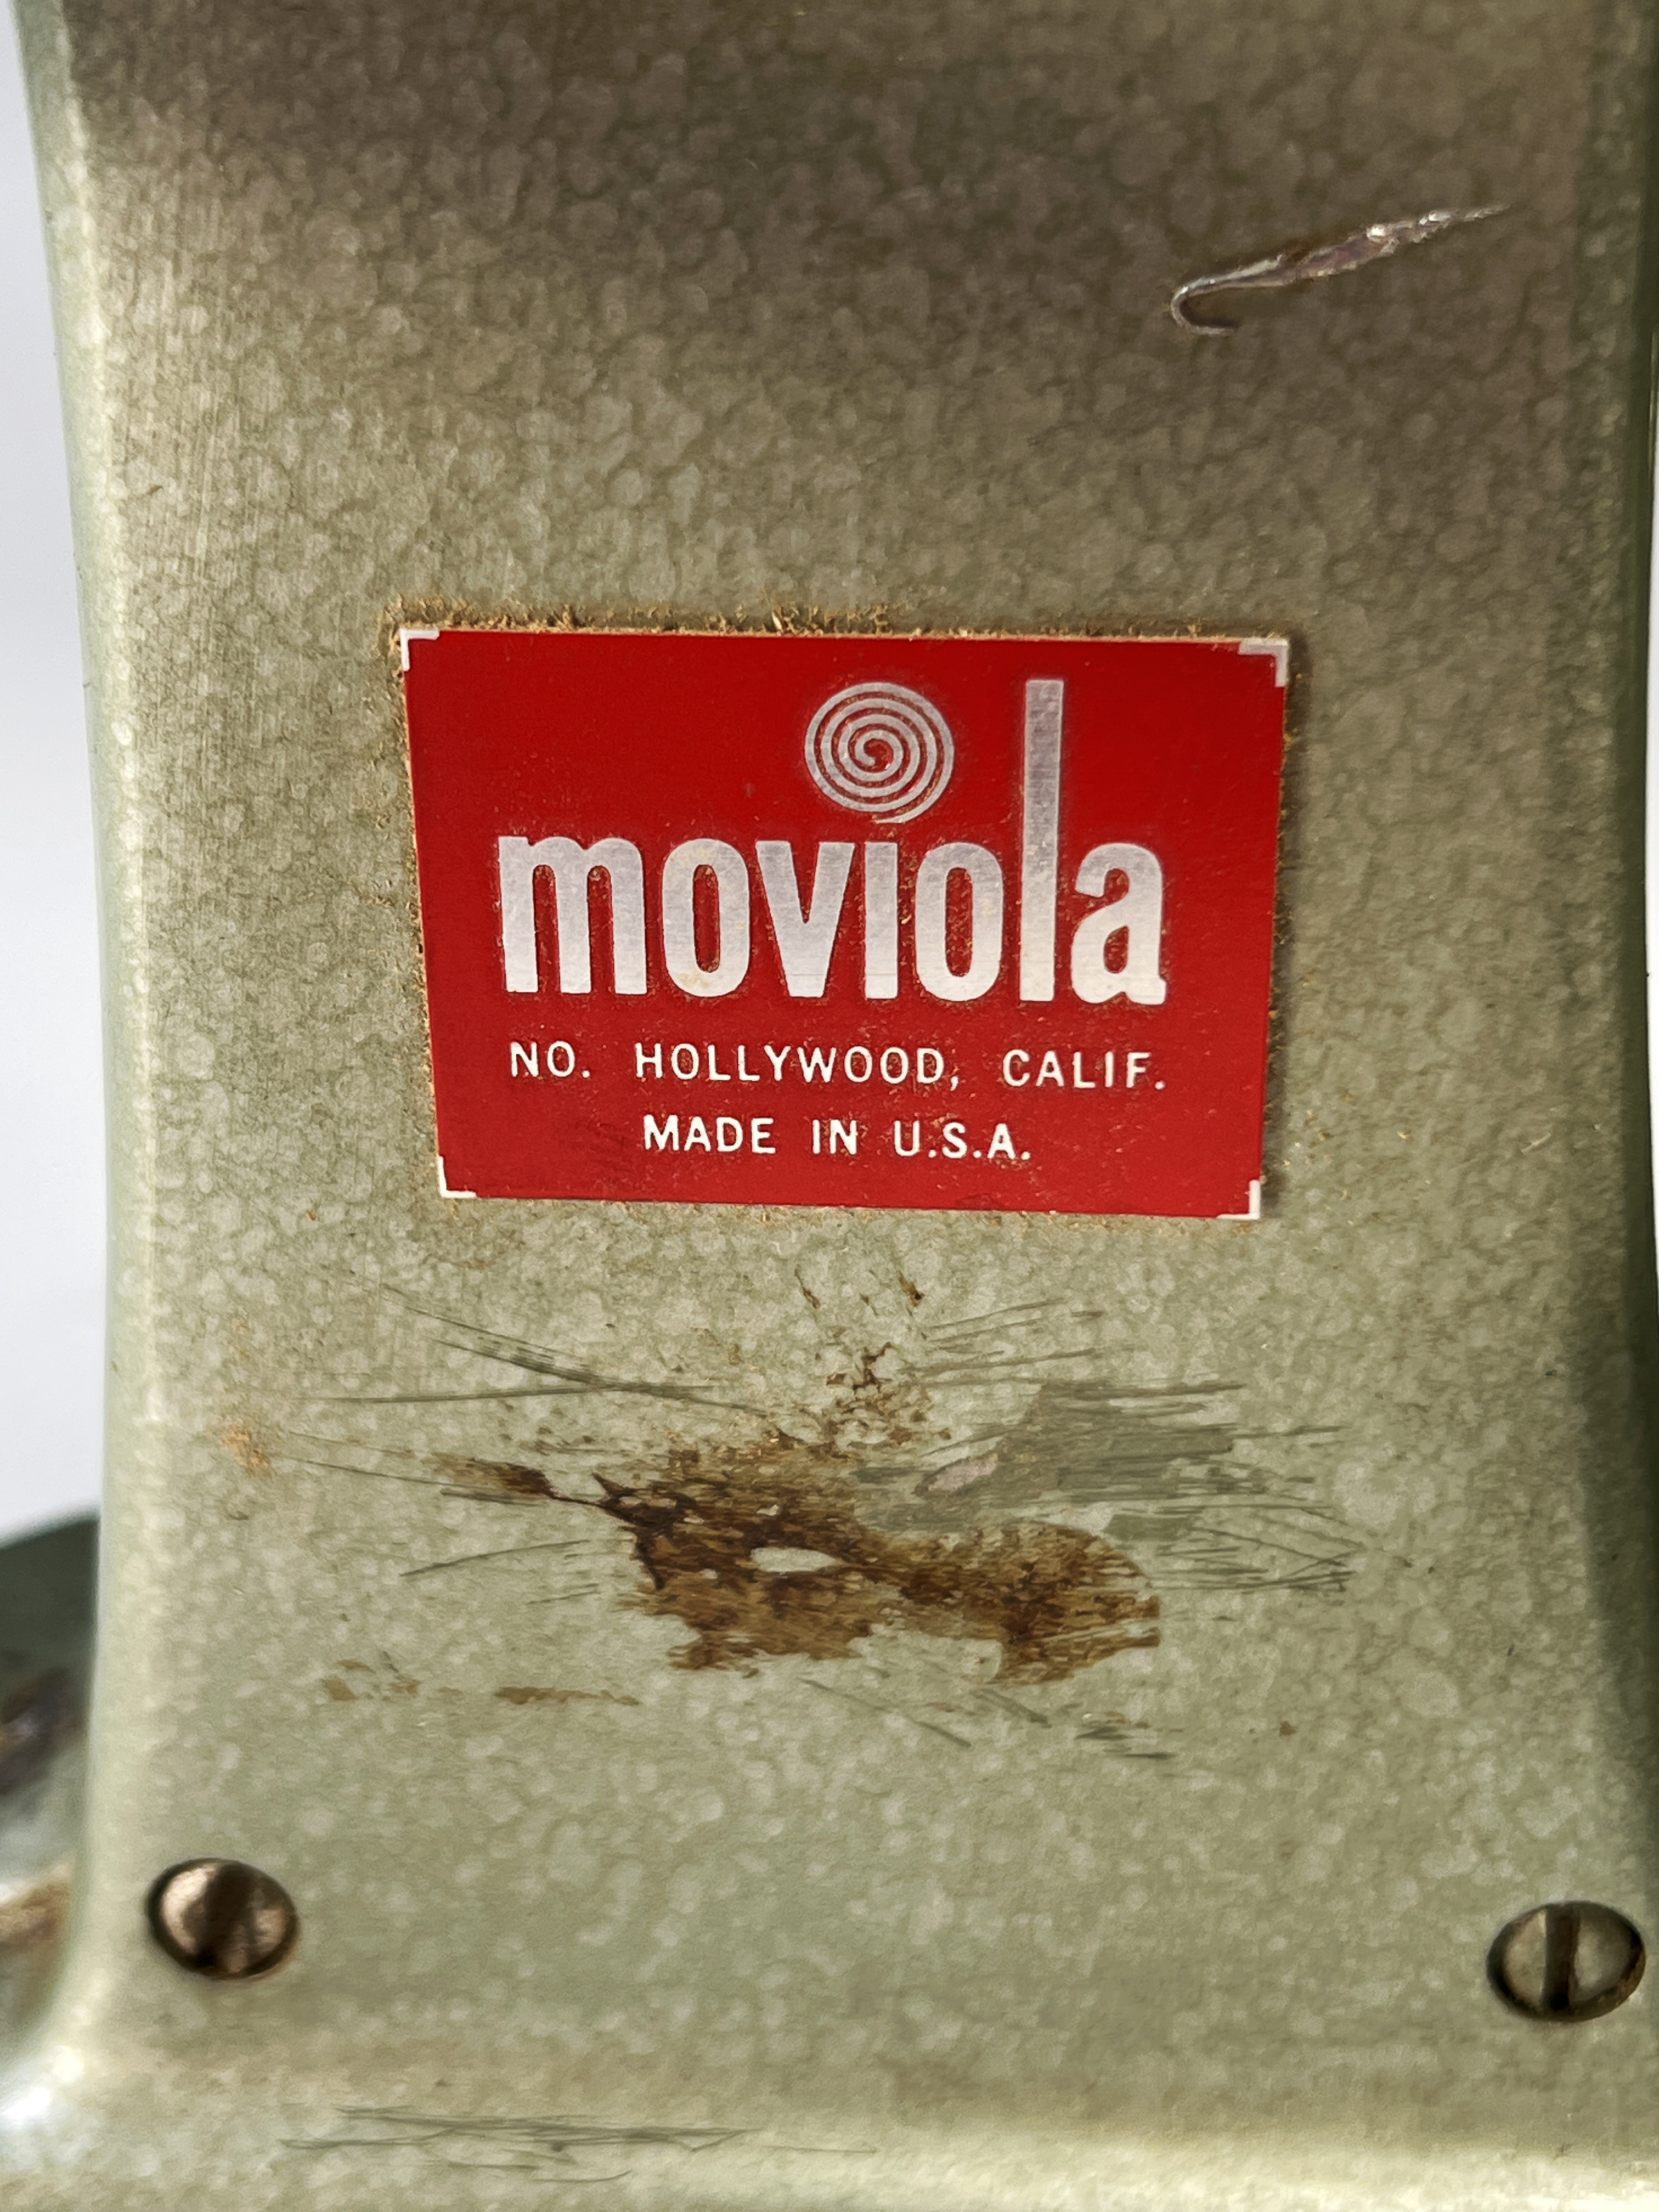 Vintage Moviola Film Editing Equipment image 3